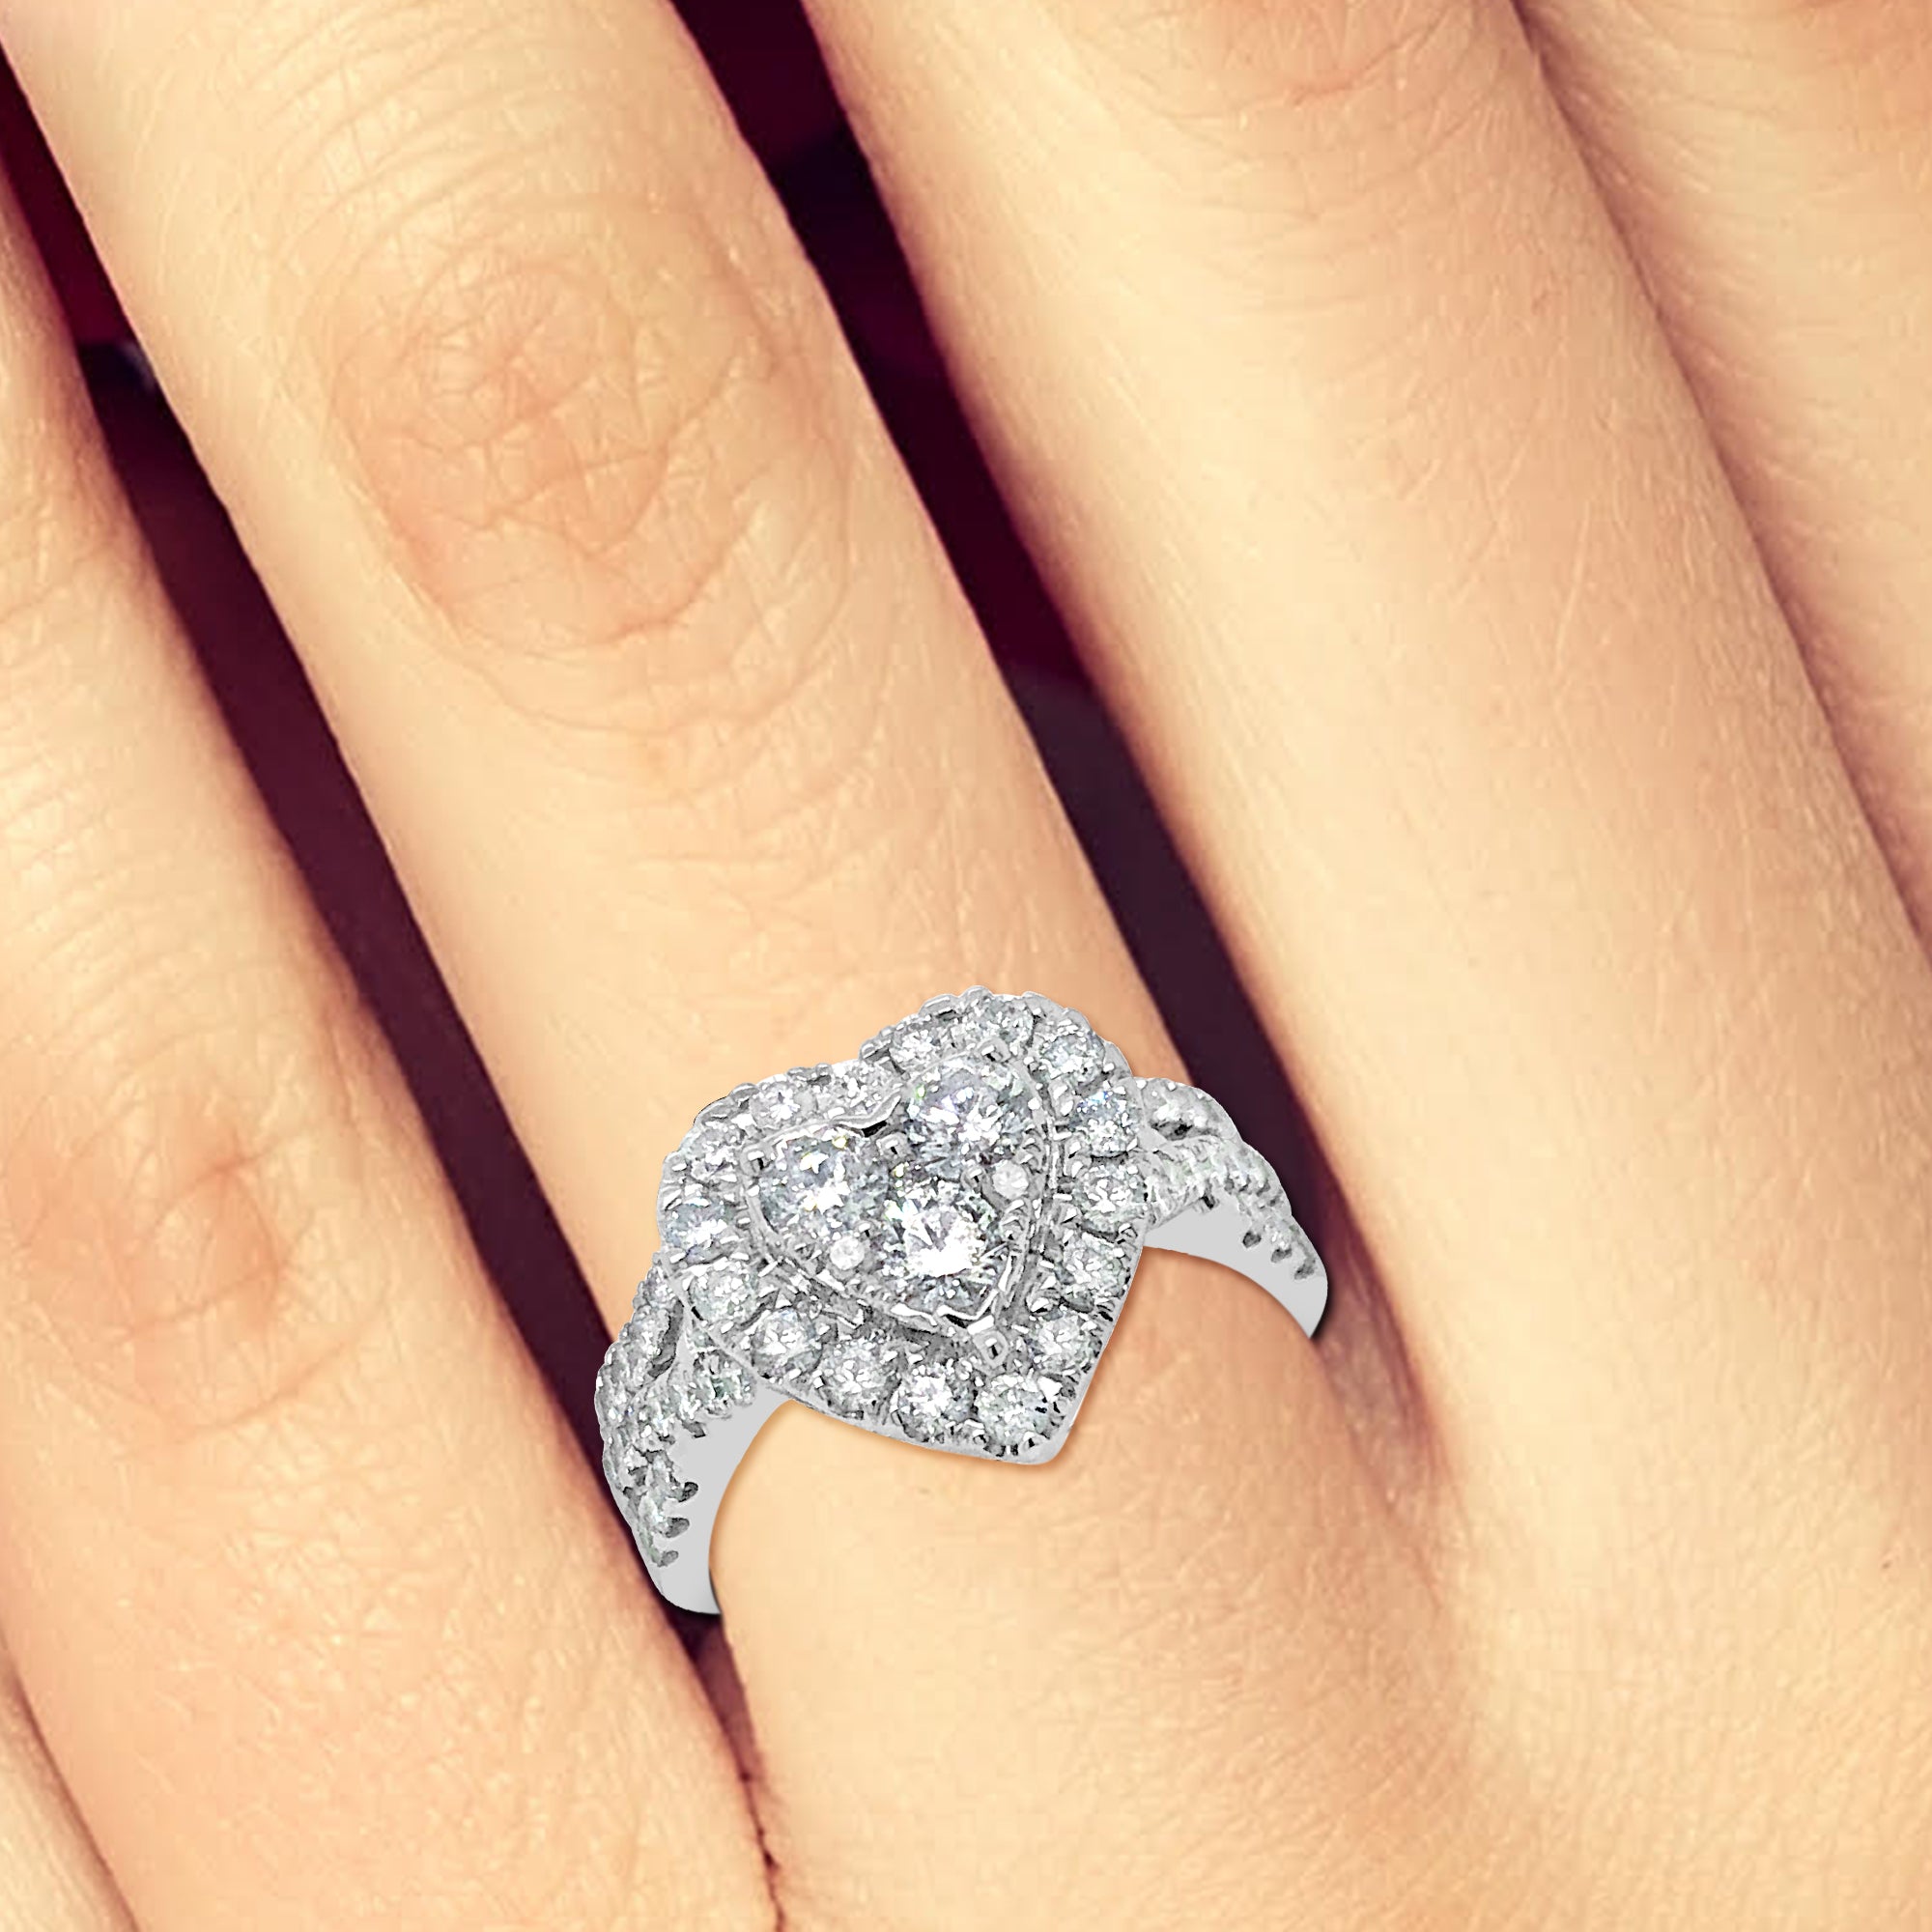 Diamond Halo Heart Shaped Engagement Ring 1.50 CTW Round Cut 14K White Gold